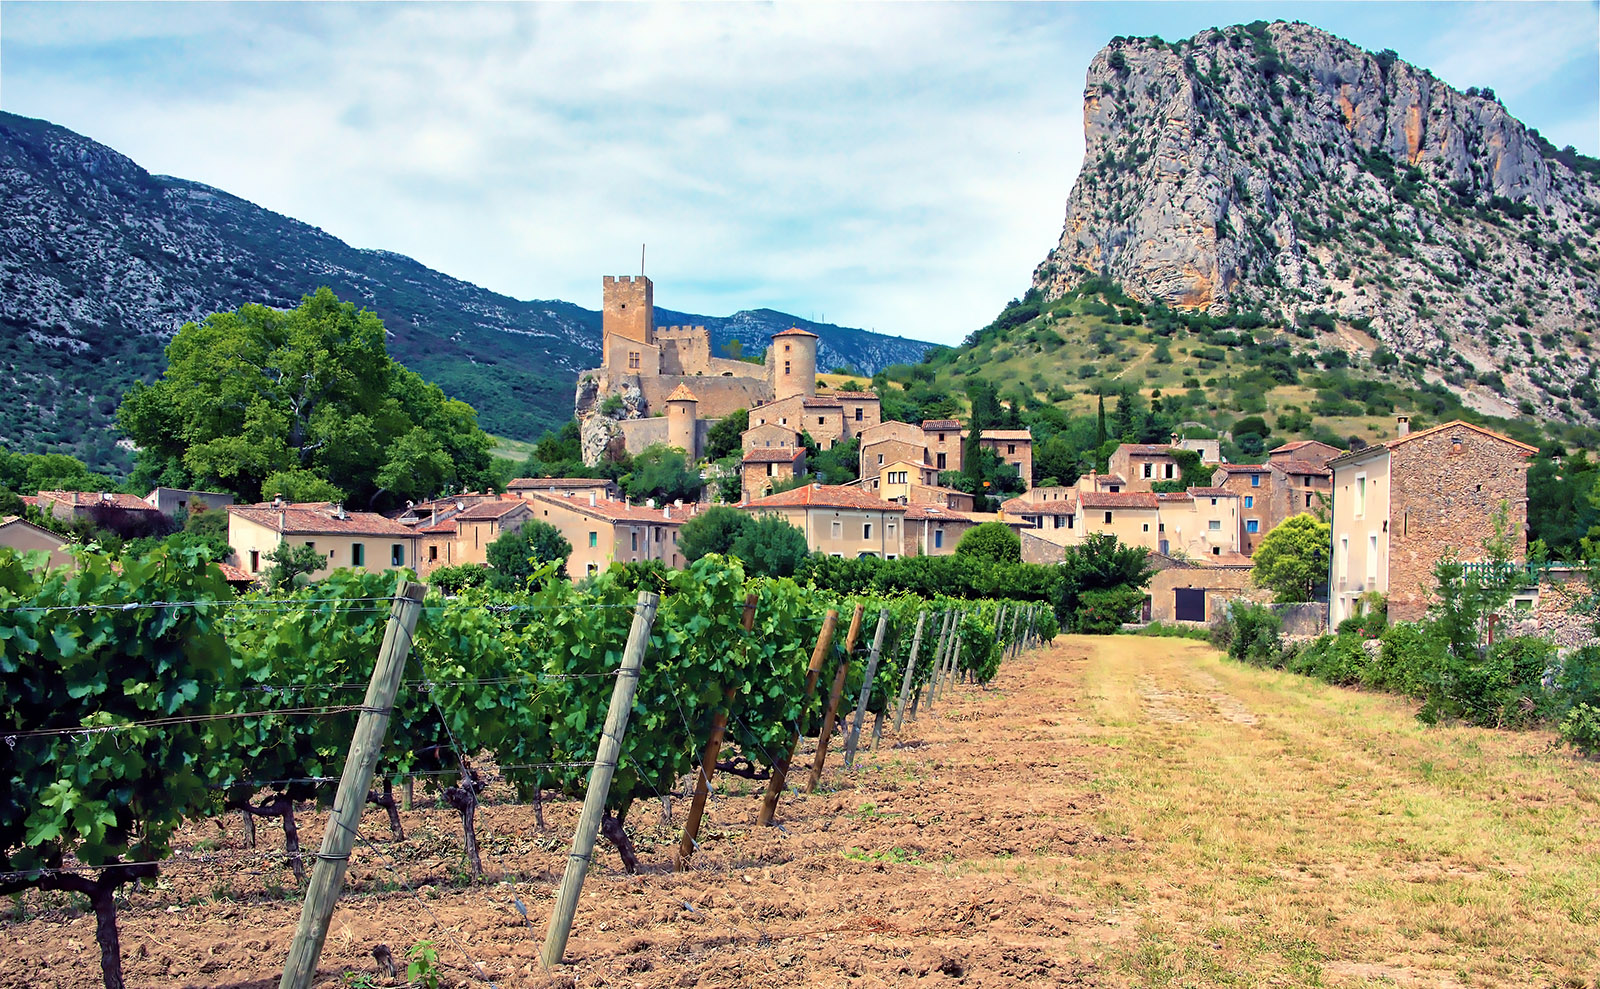 vineyards in the village of Saint Jean de Bueges in Languedoc, France